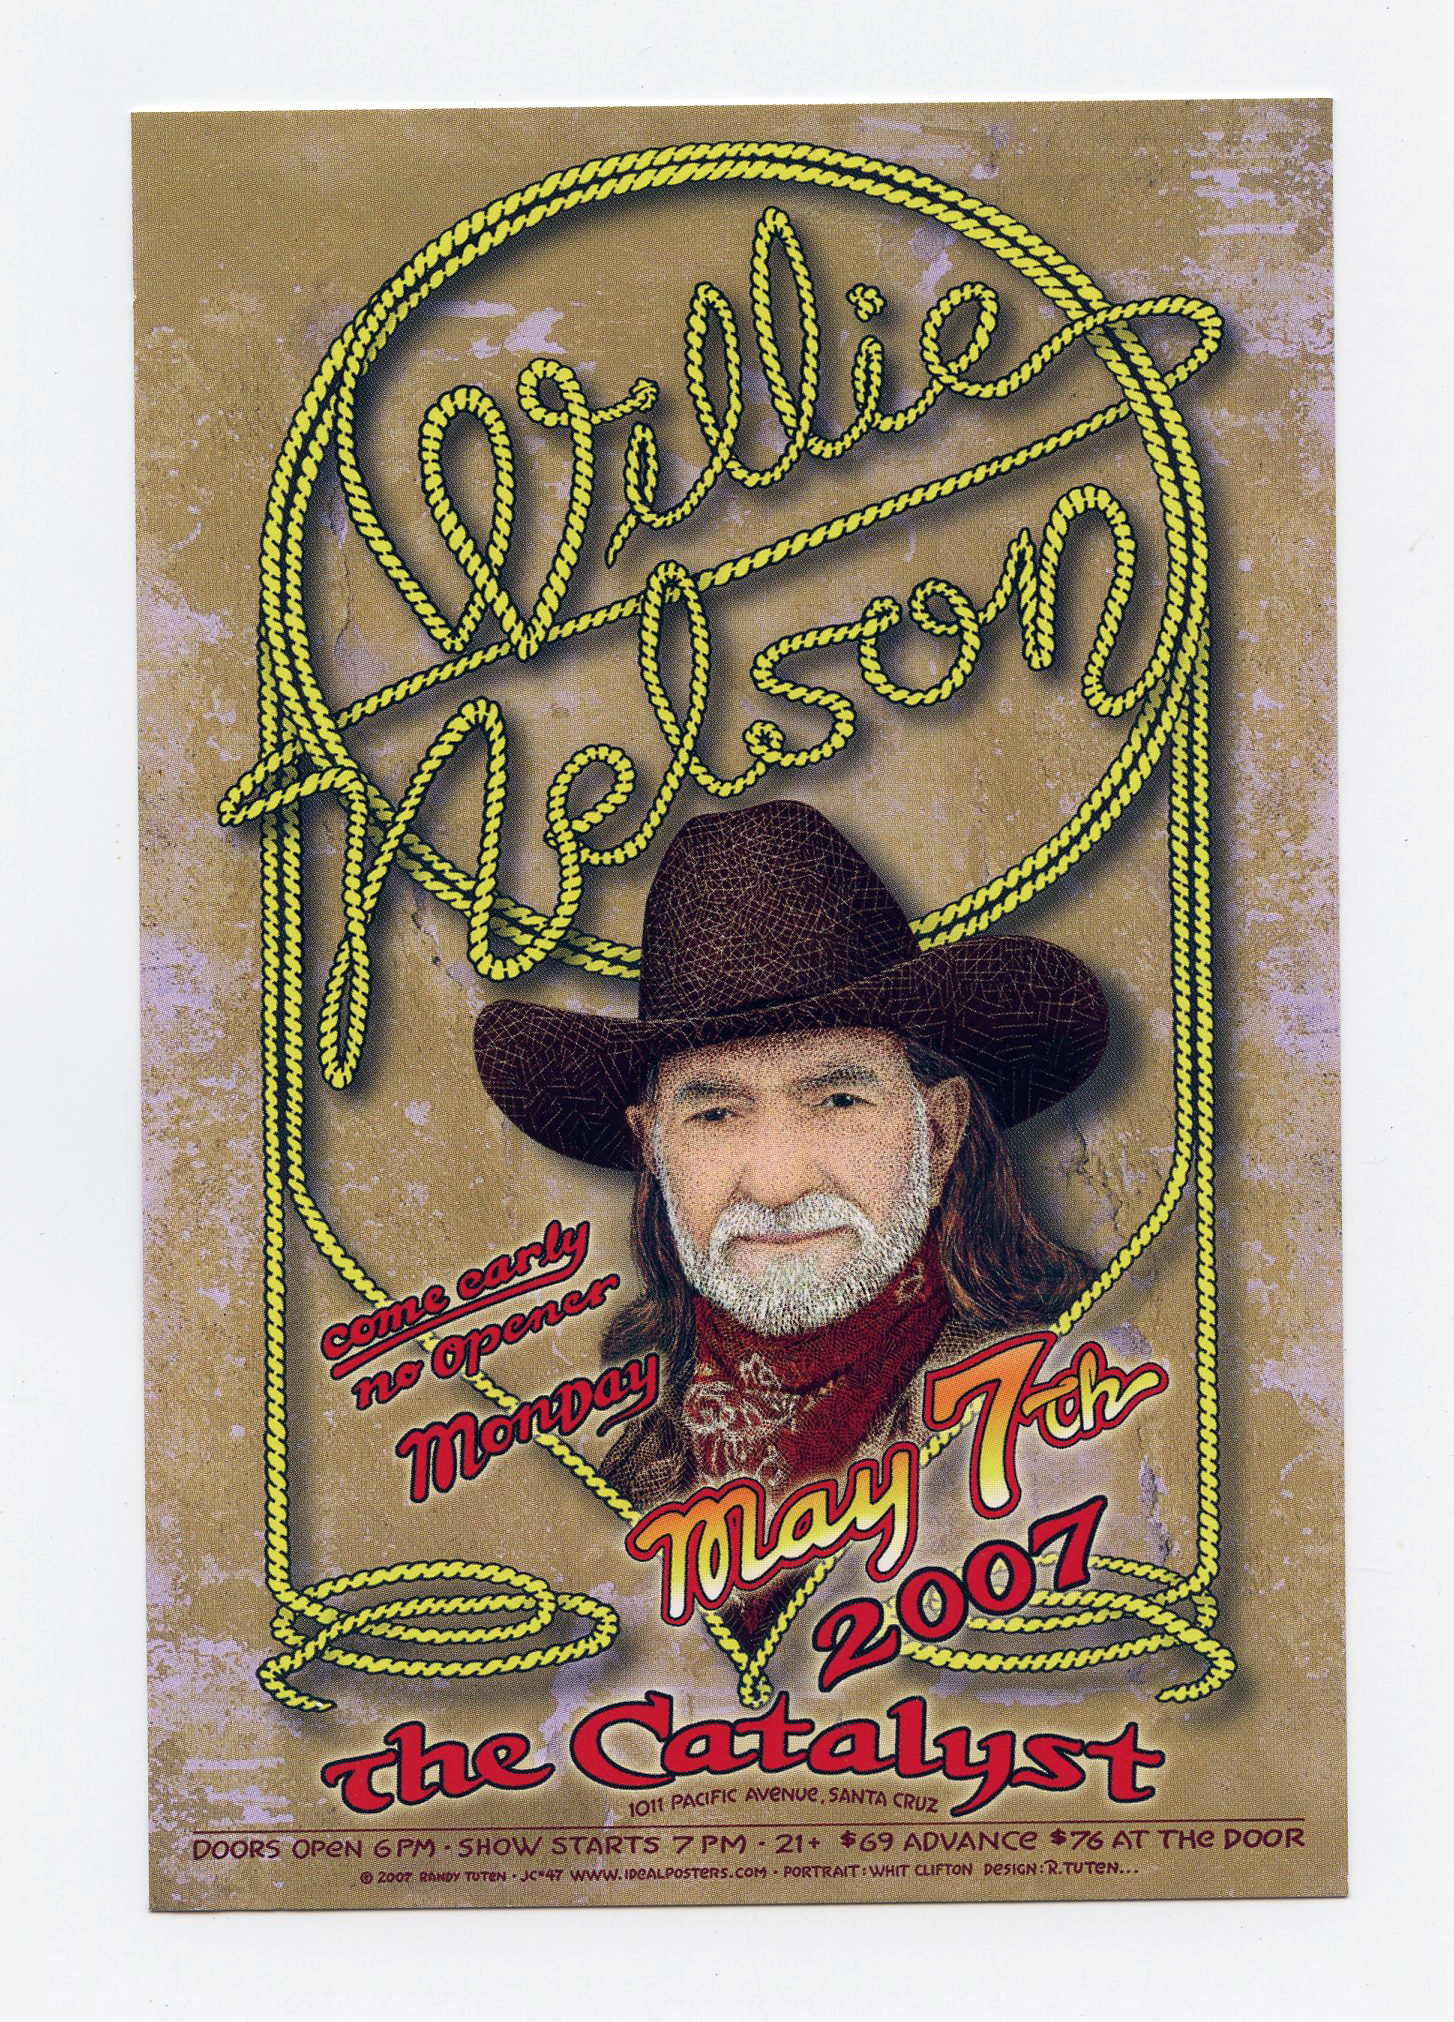 Willie Nelson Handbill 2007 May 7 The Catalyst Santa Cruz